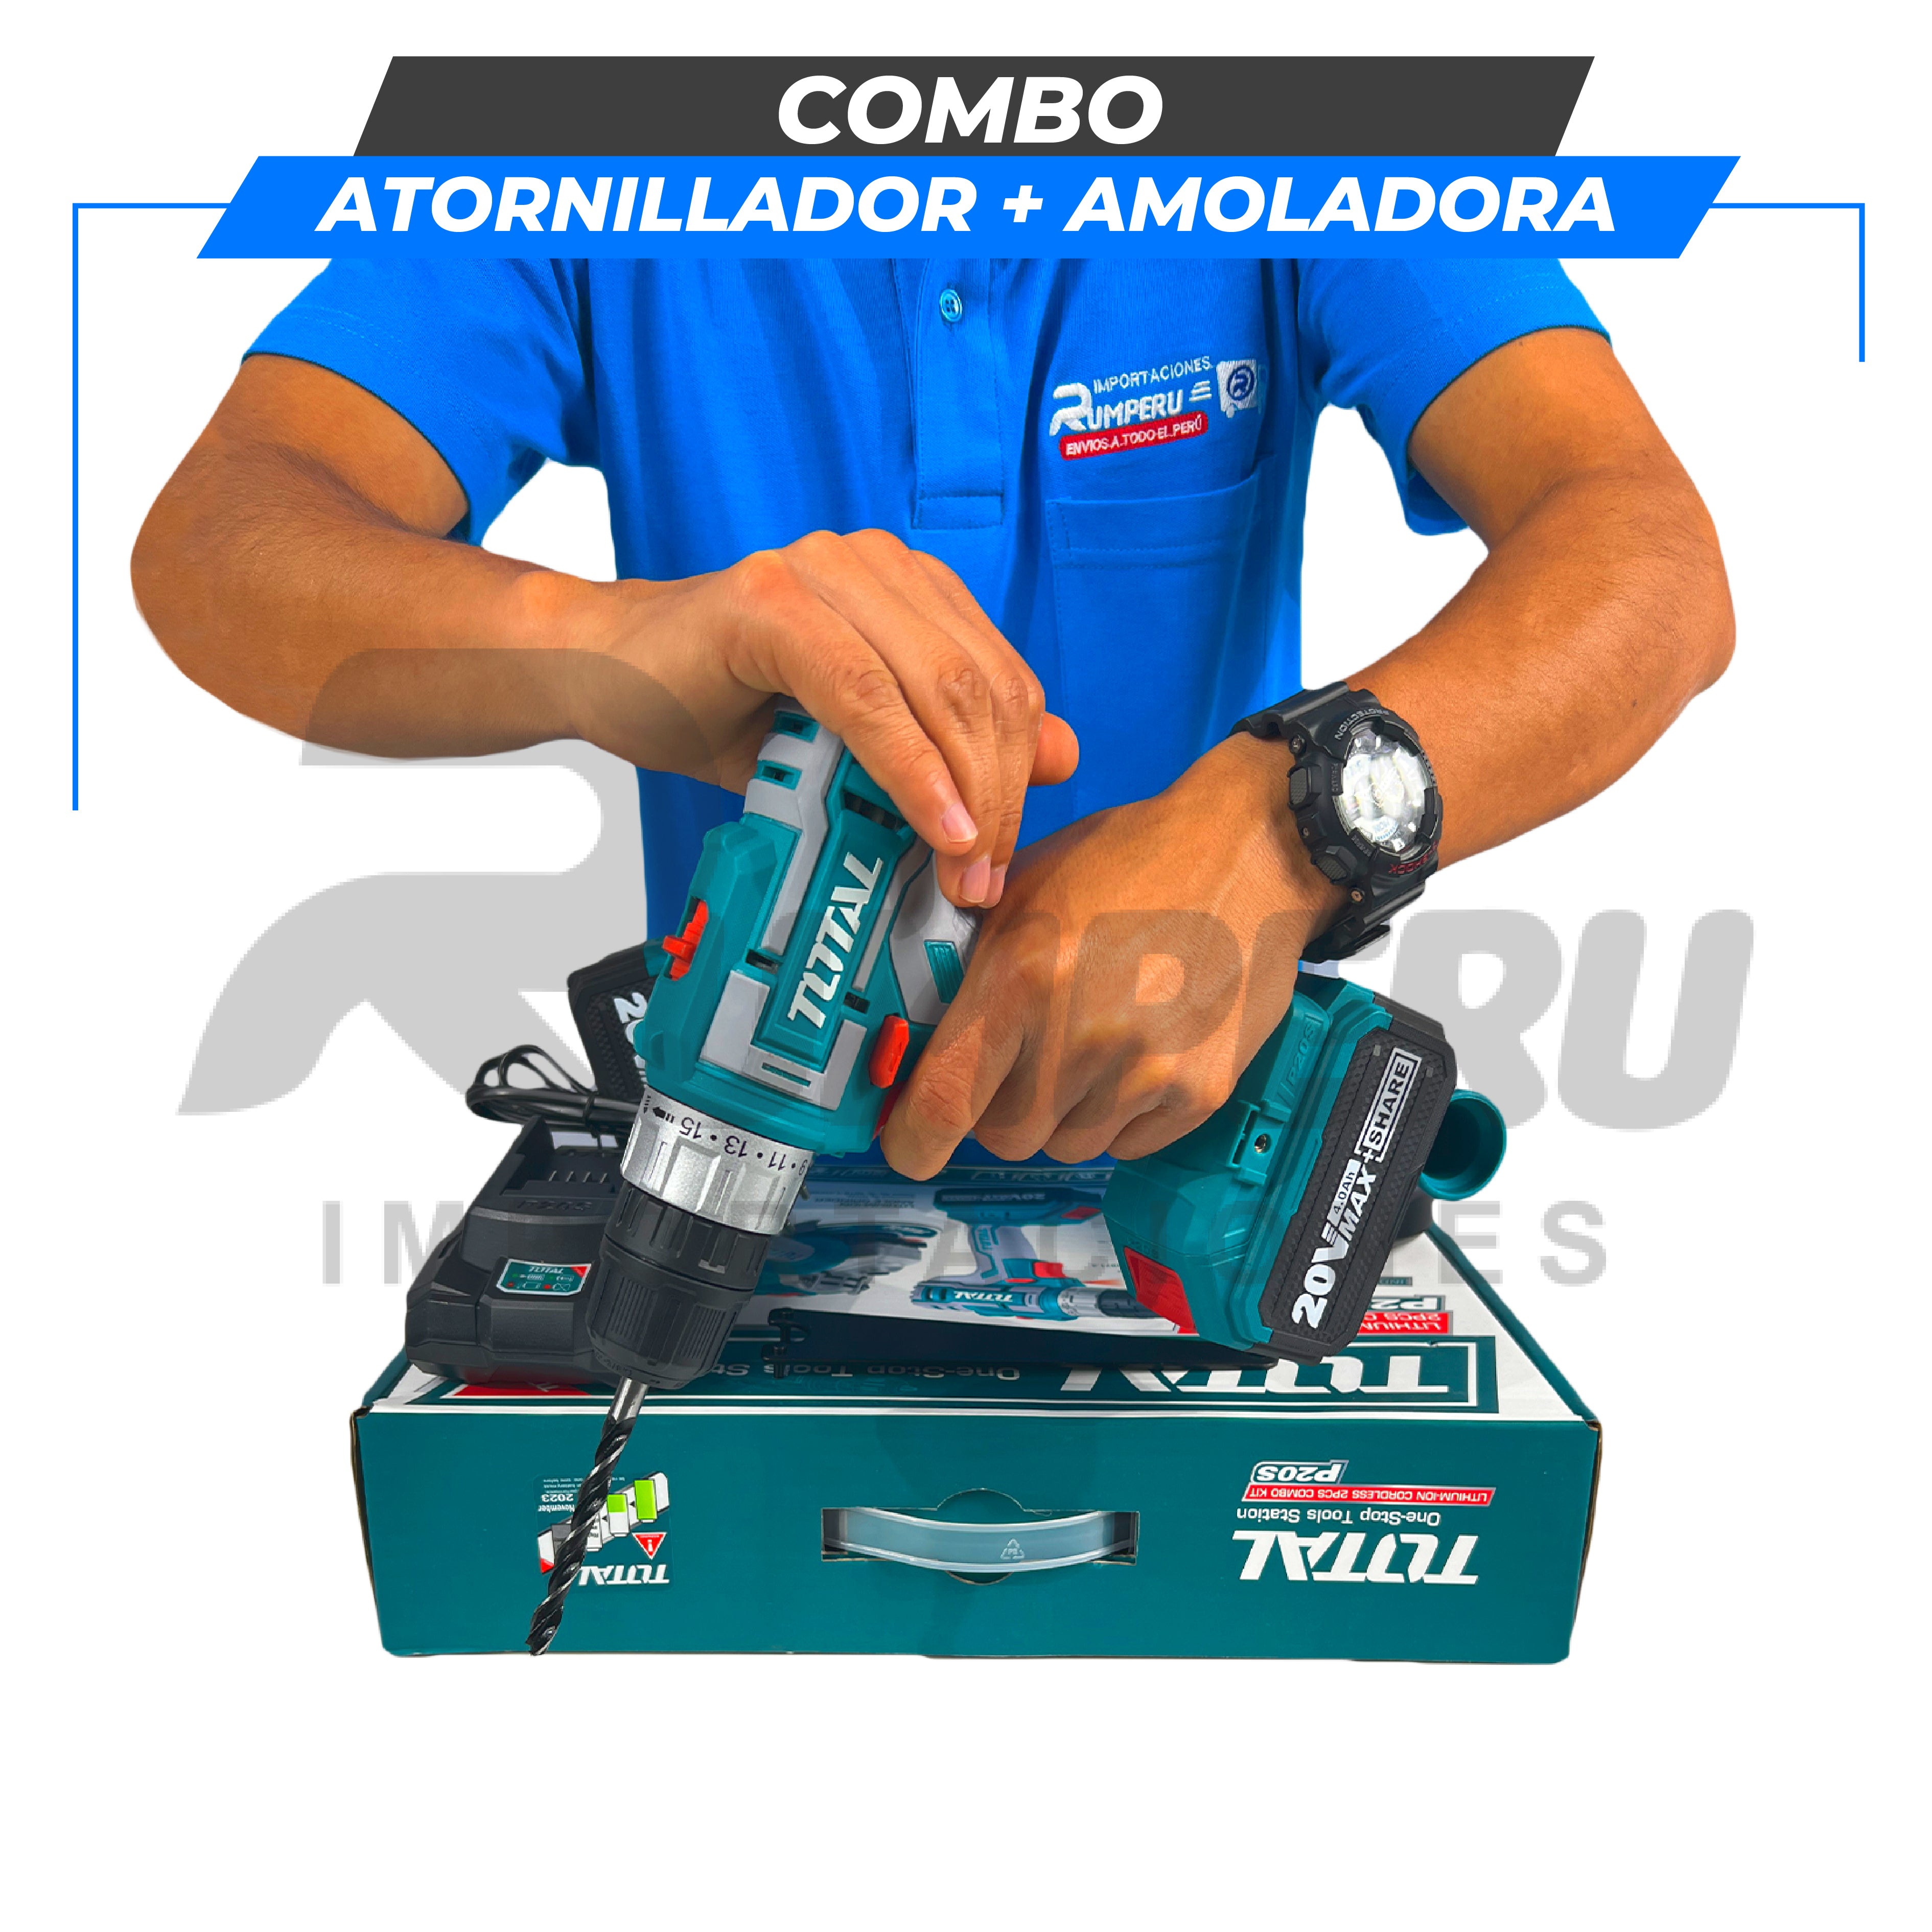 Combo Atornillador + Taladro 20V Total